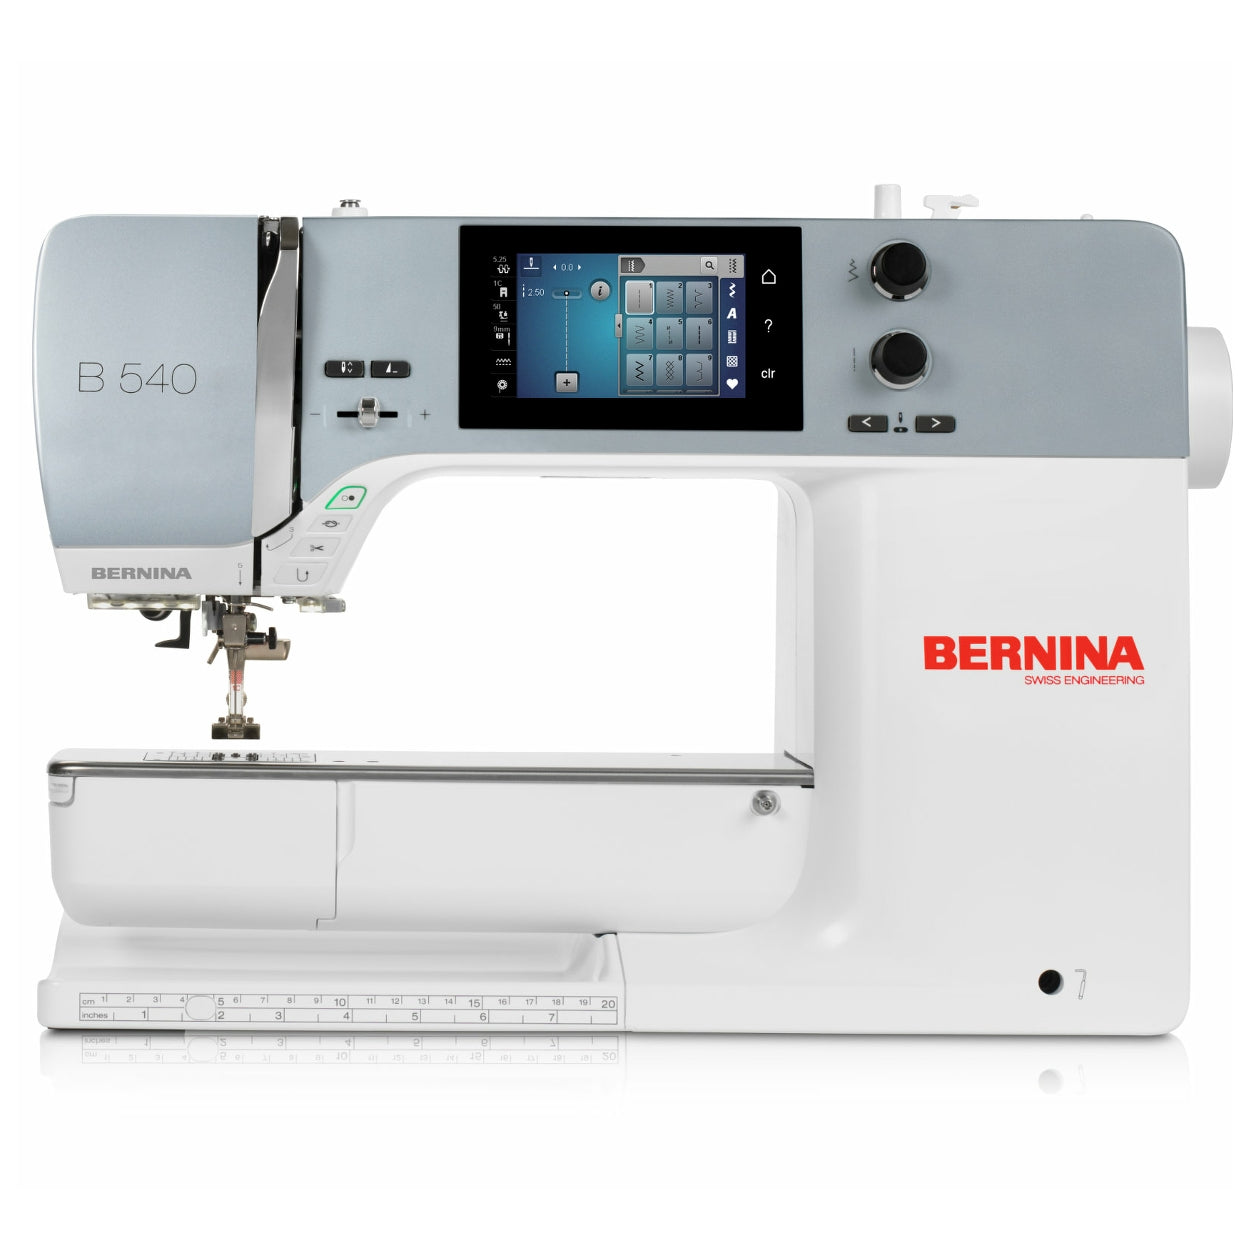 Bernina 540 sewing machine from Jaycotts Sewing Supplies